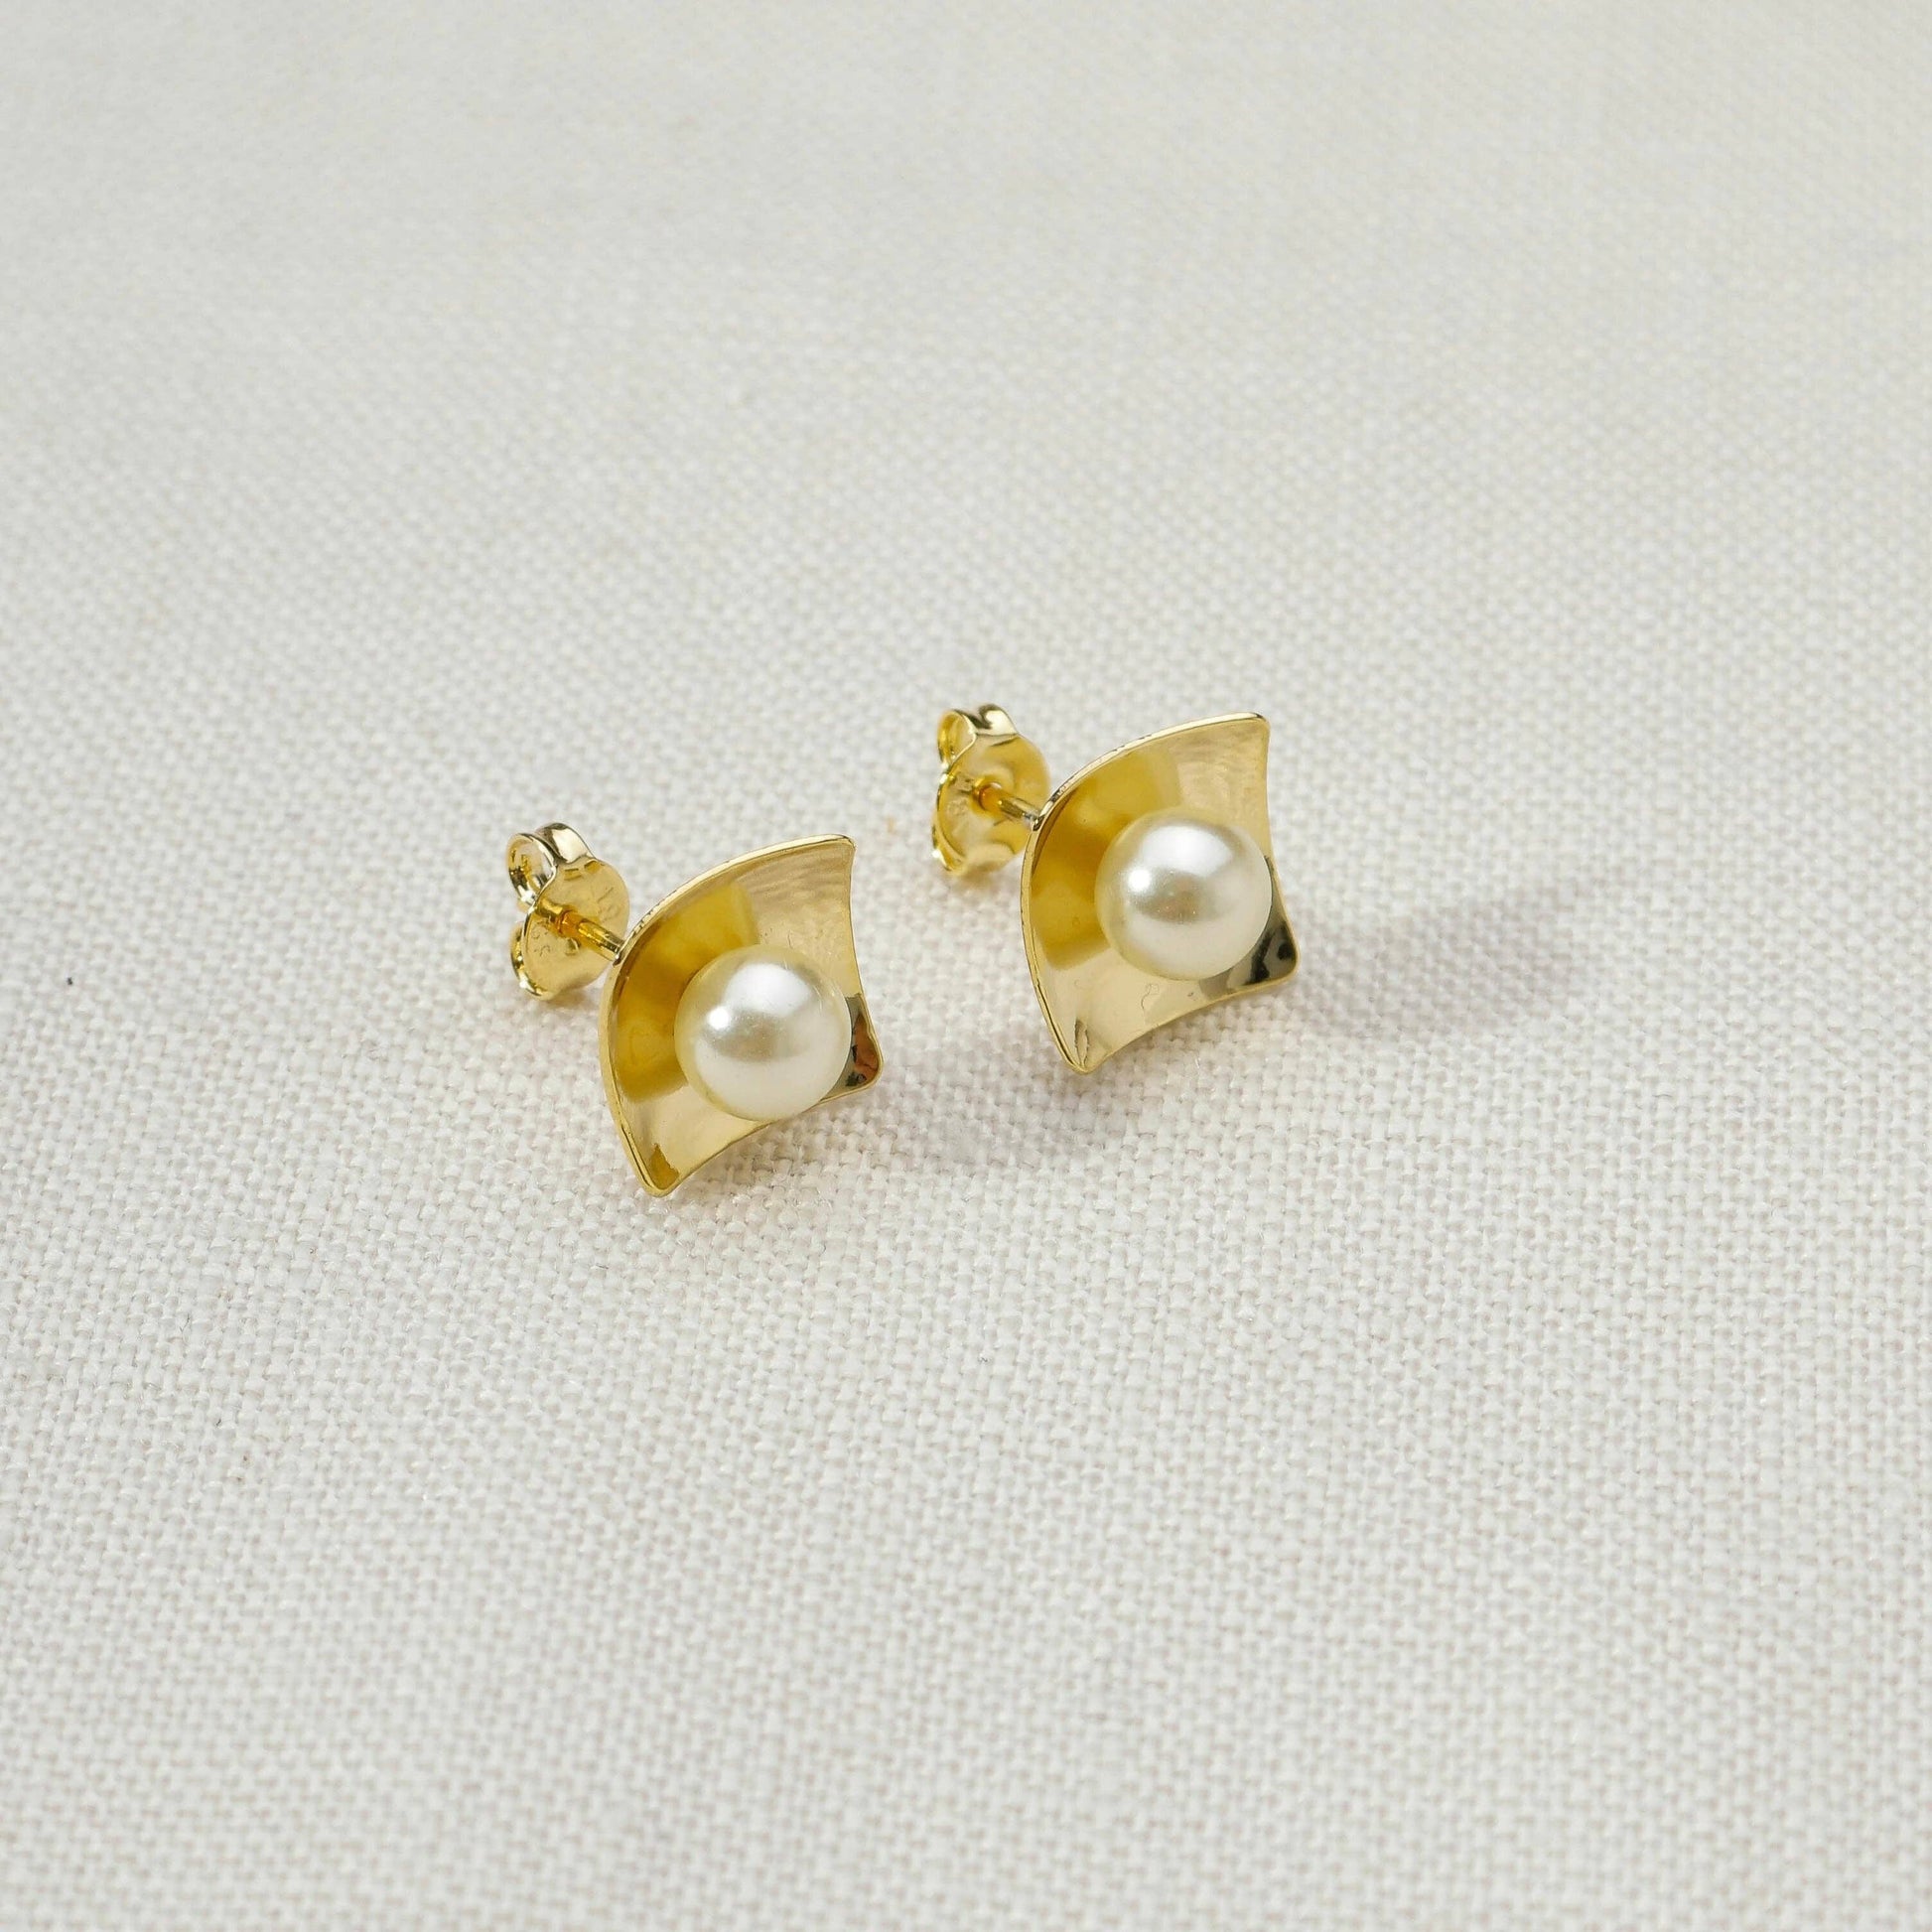 18 karat gold filled pearl stud earring set in gold plate anti-tarnish hypoallergenic 